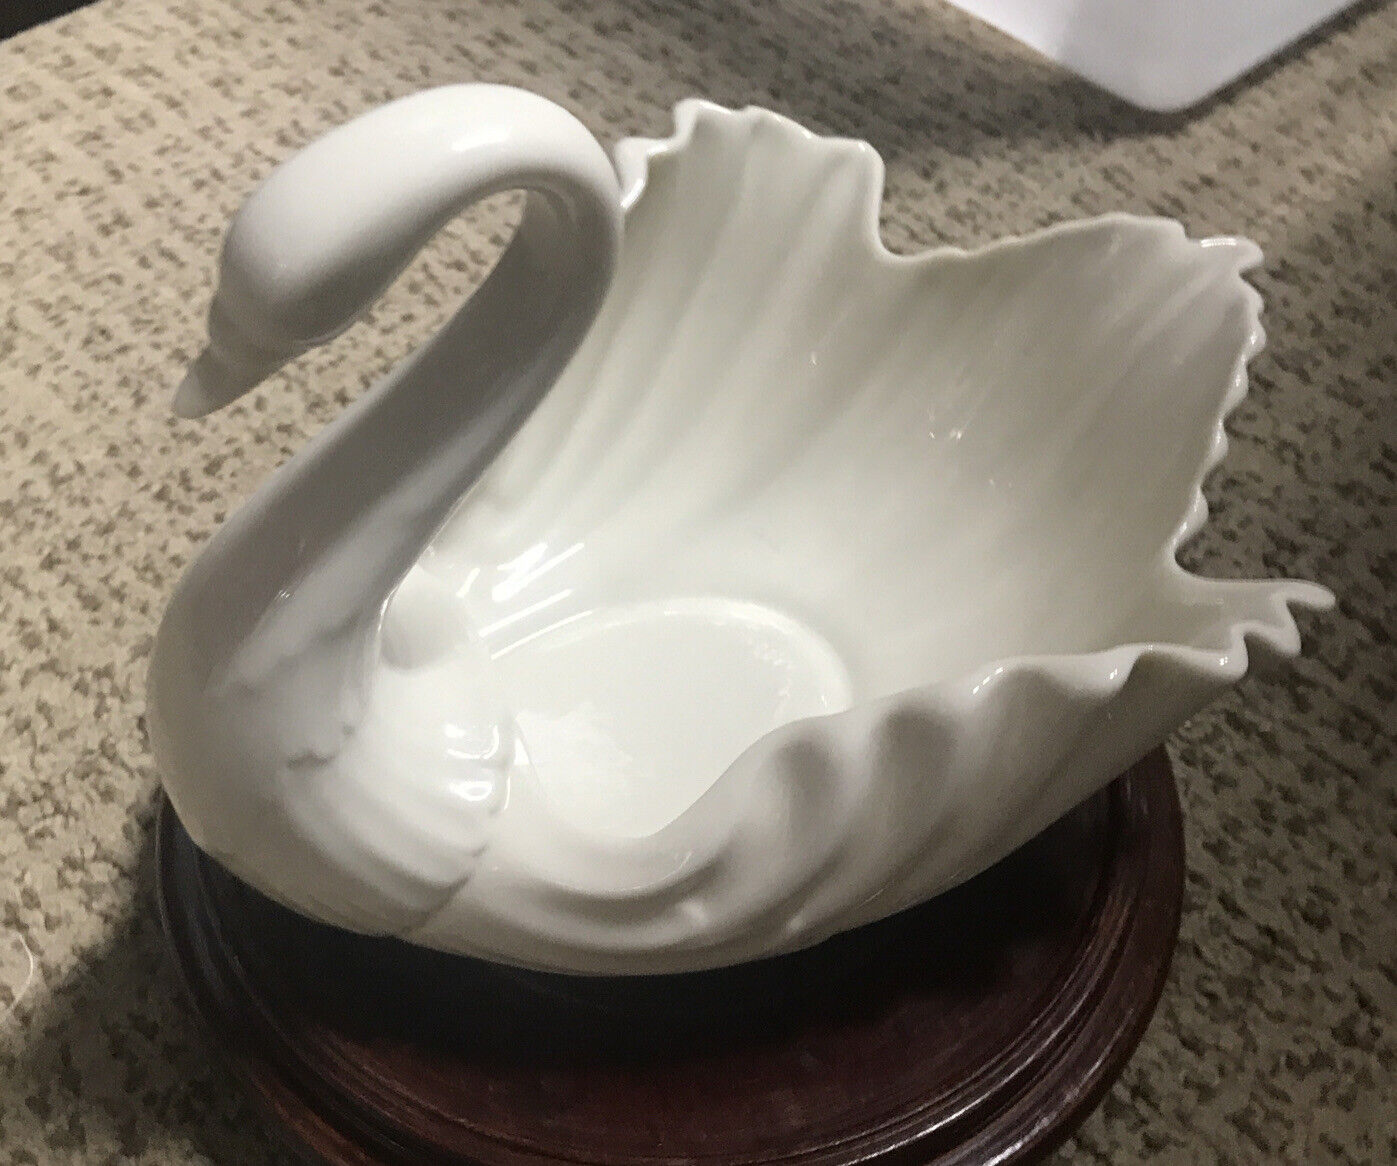 Vintage Lenox Swan Trinket Dish Porcelain Dish Decor Accessory Made in USA 8 x 6